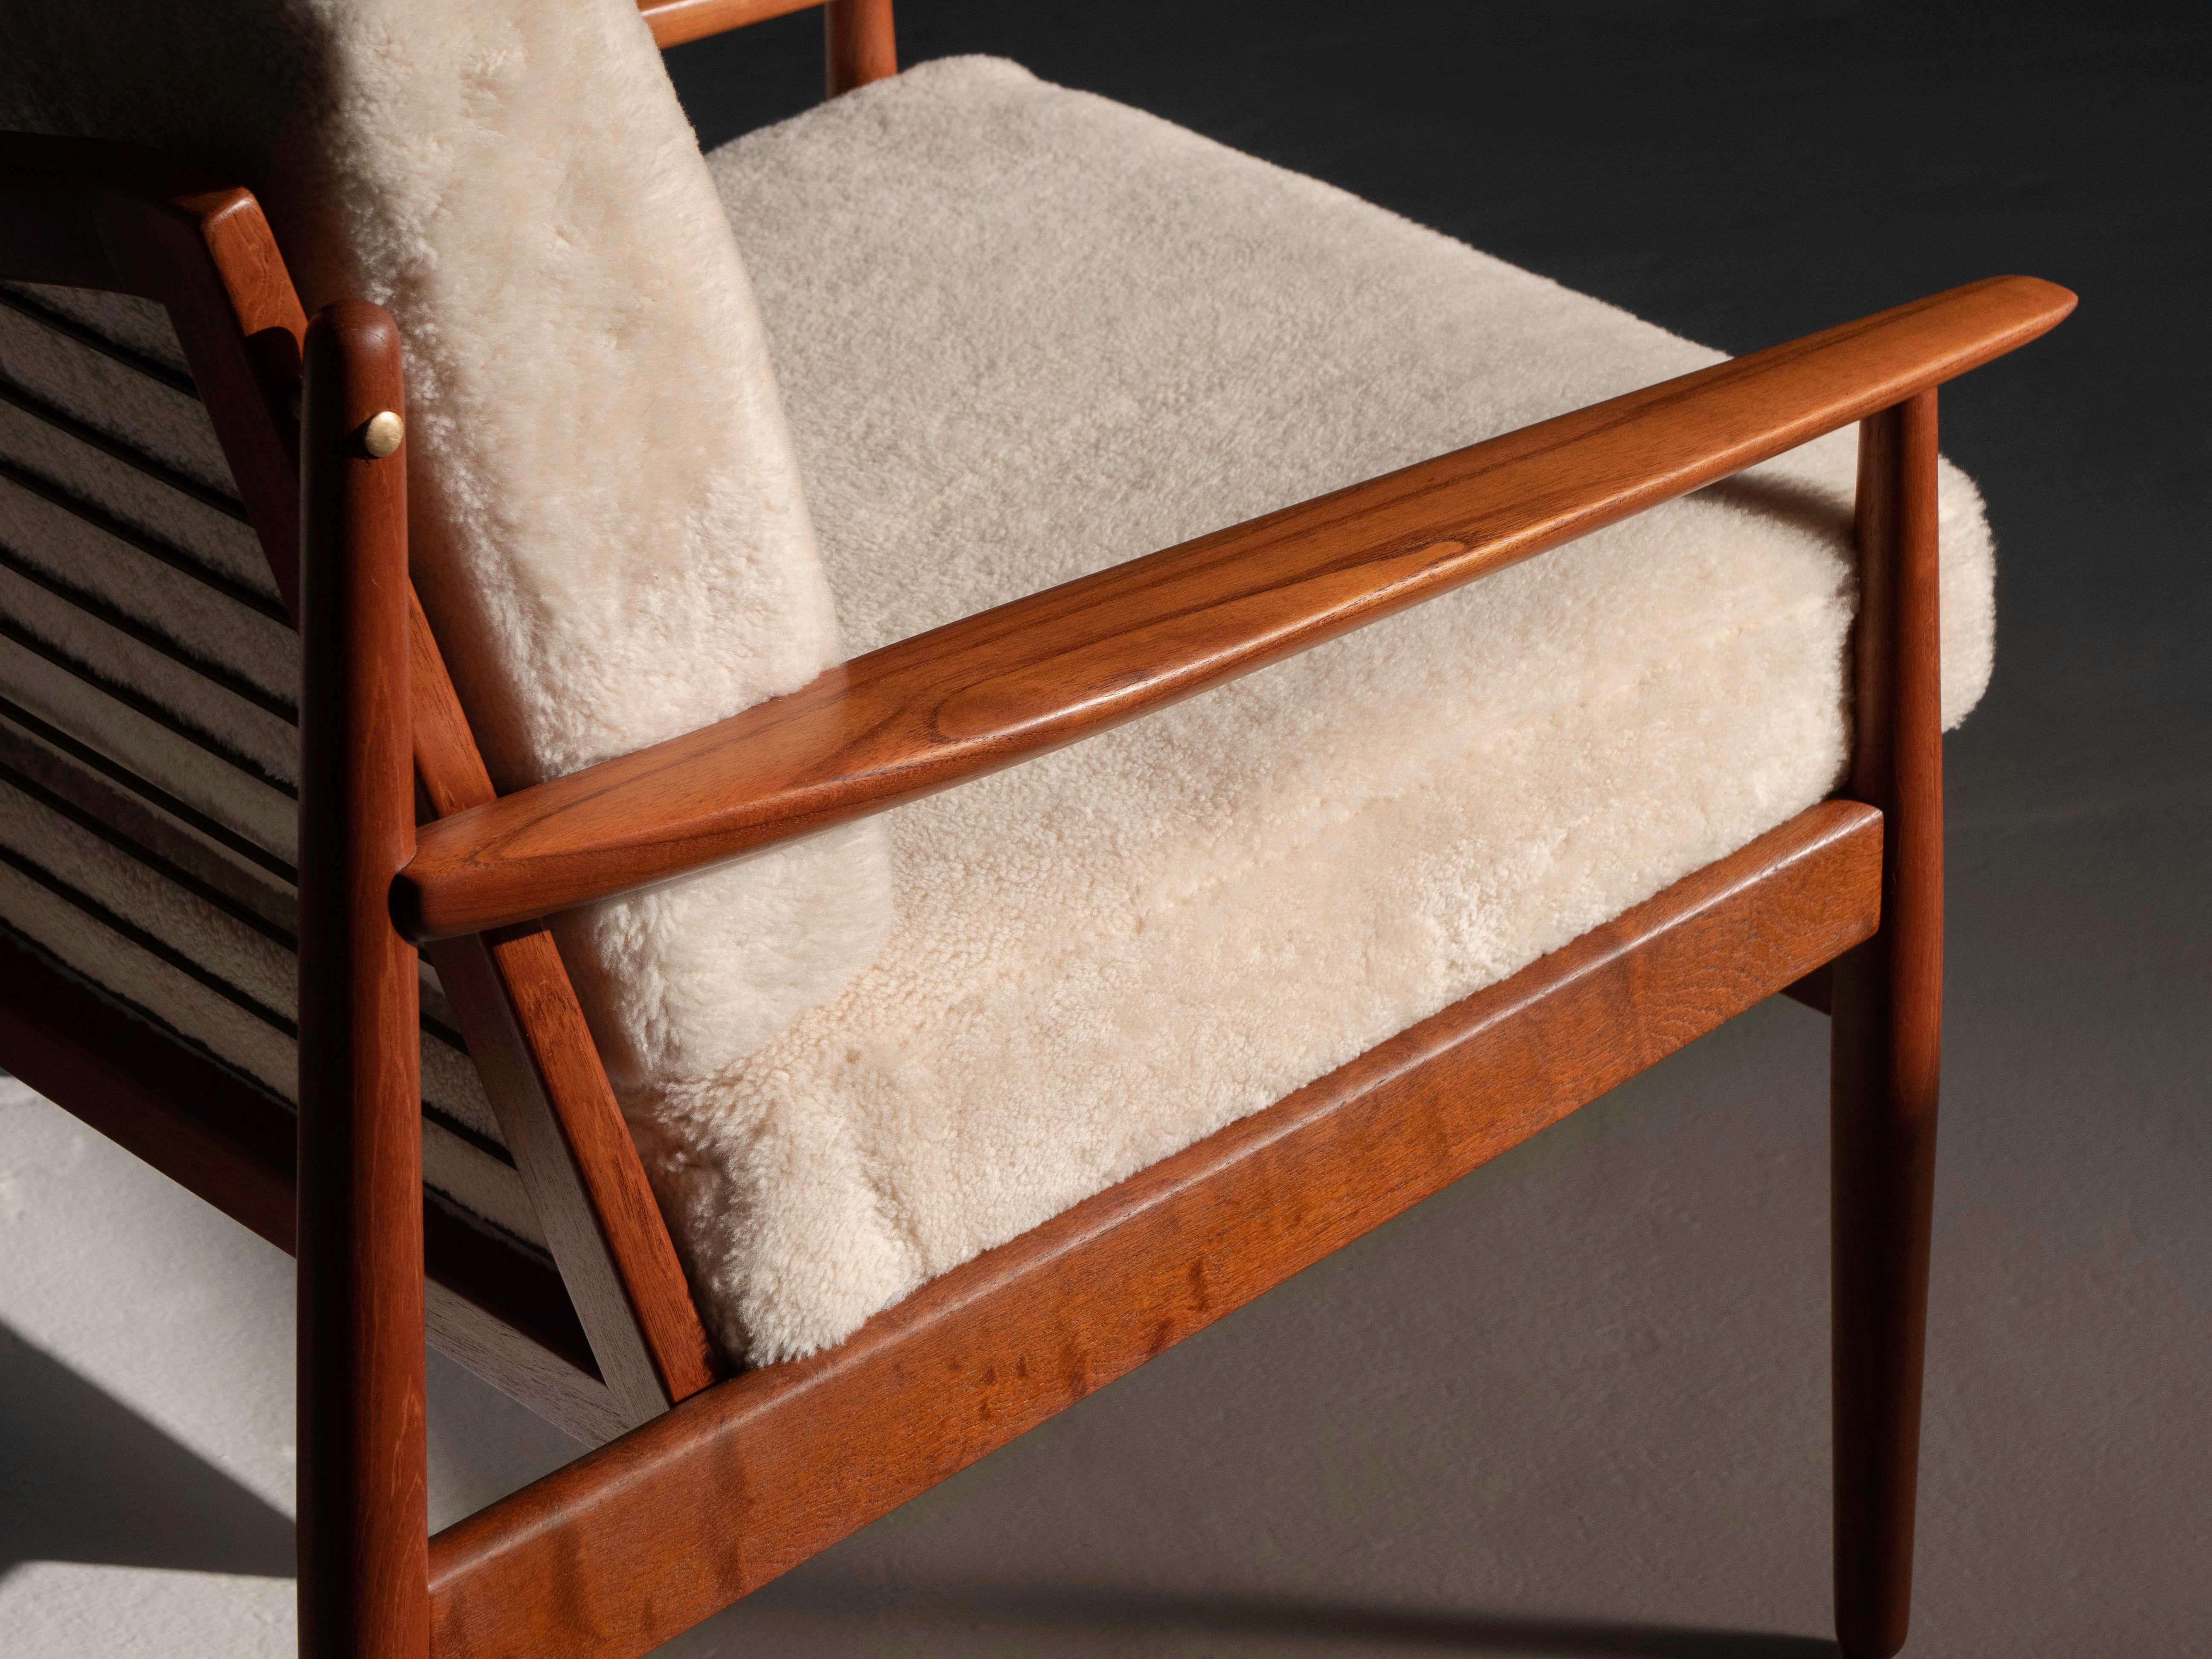 Sheepskin Svend Age Eriksen Genuine Shearling Lounge Chair for Glostrup Møbelfabrik 1960's For Sale